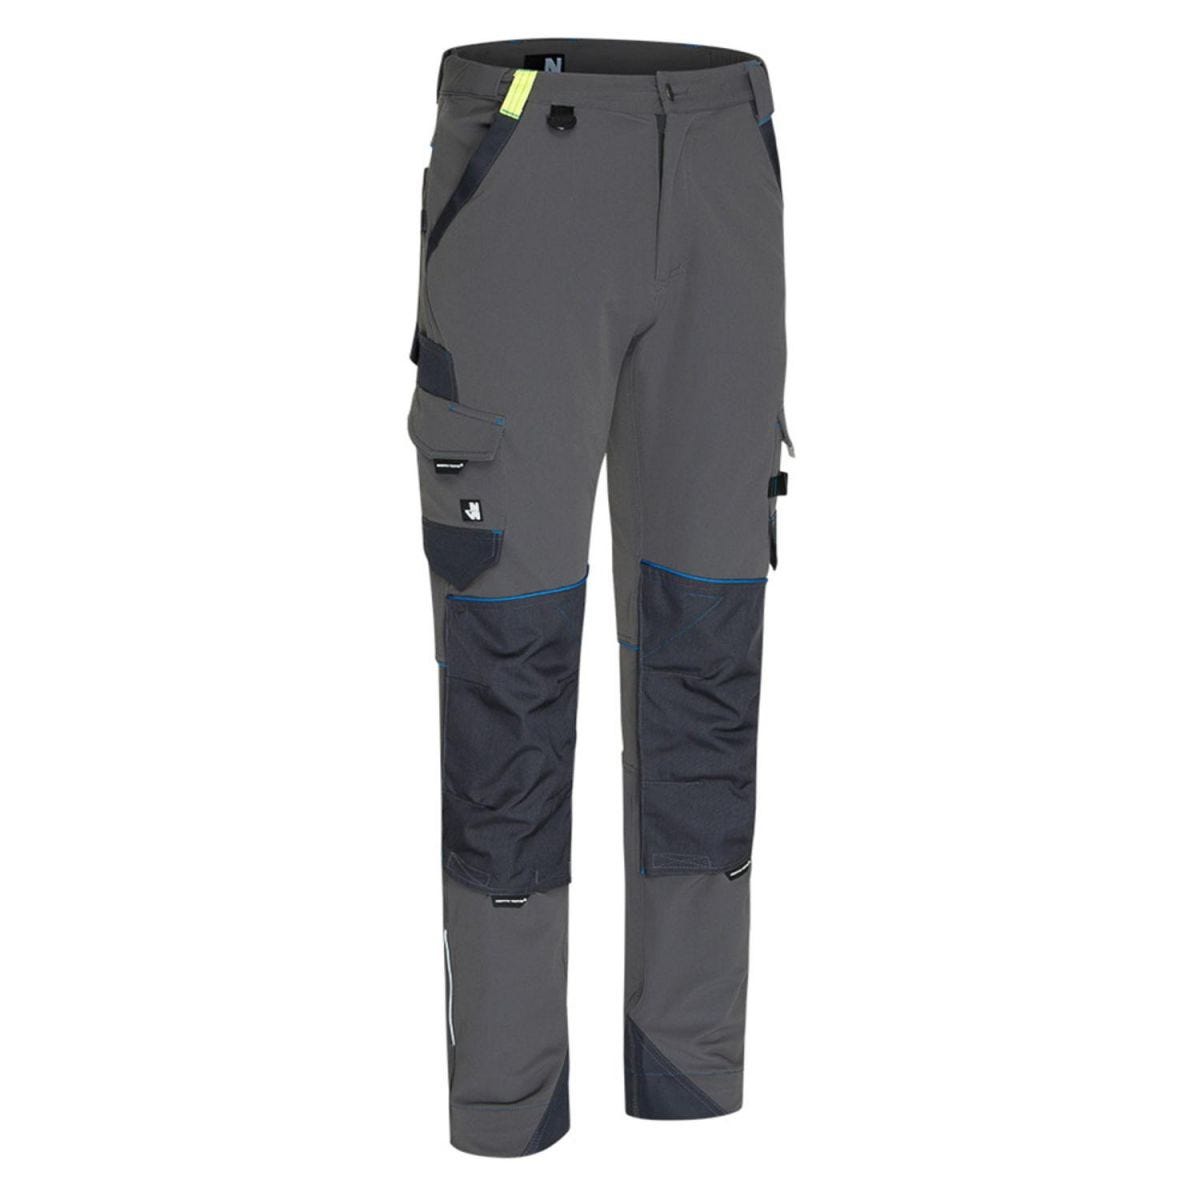 Pantalon de travail SACHA gris/bleu - North Ways - Taille 52 0